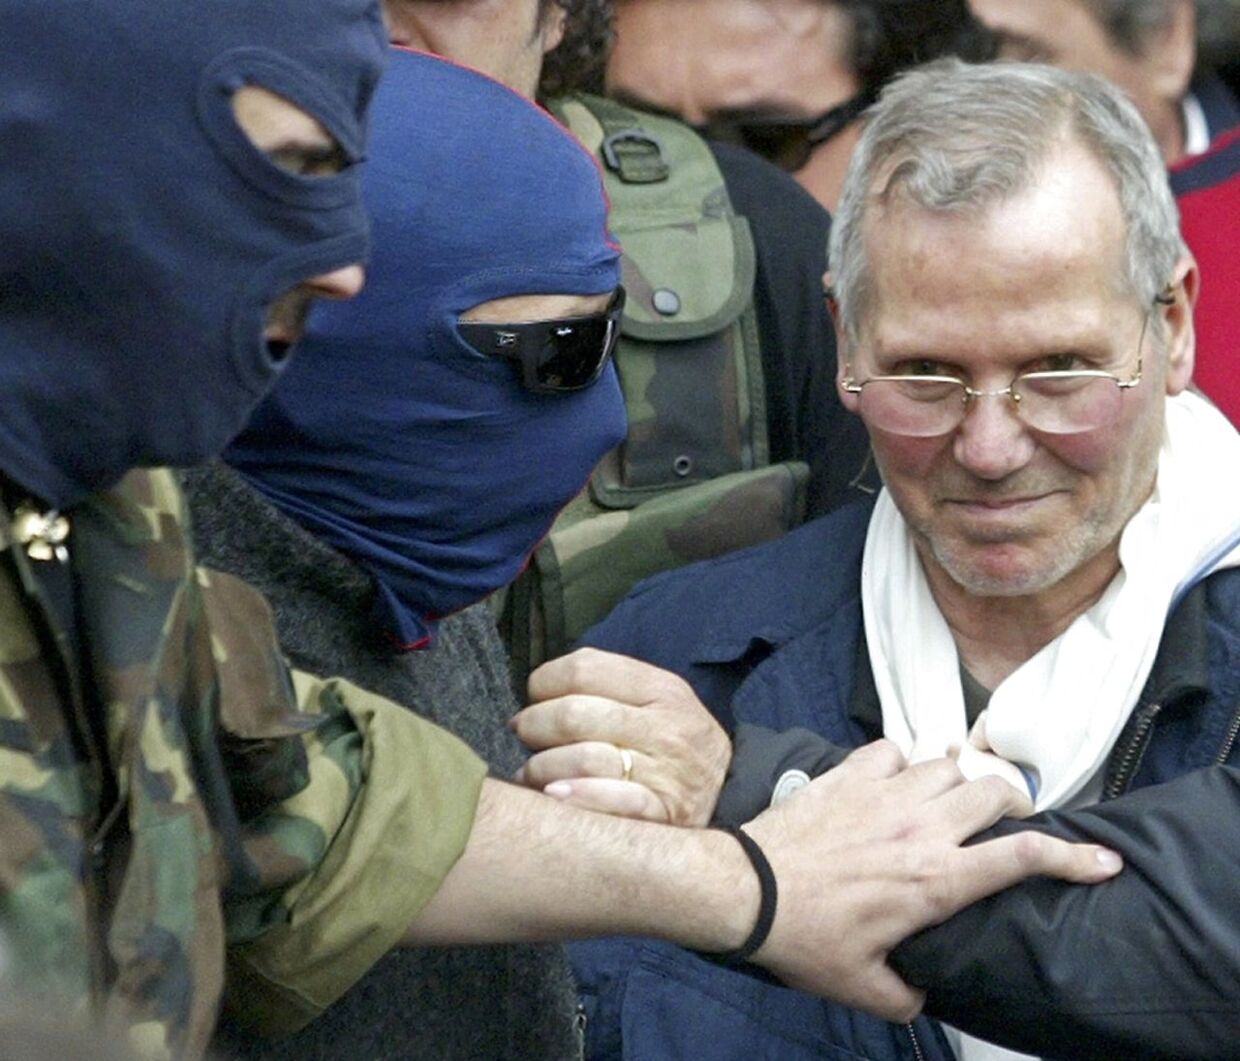 Bernardo Provenzano blev anholdt 11. april, 2006 efter 43 år i skjul. REUTERS/Marcello Paternostro